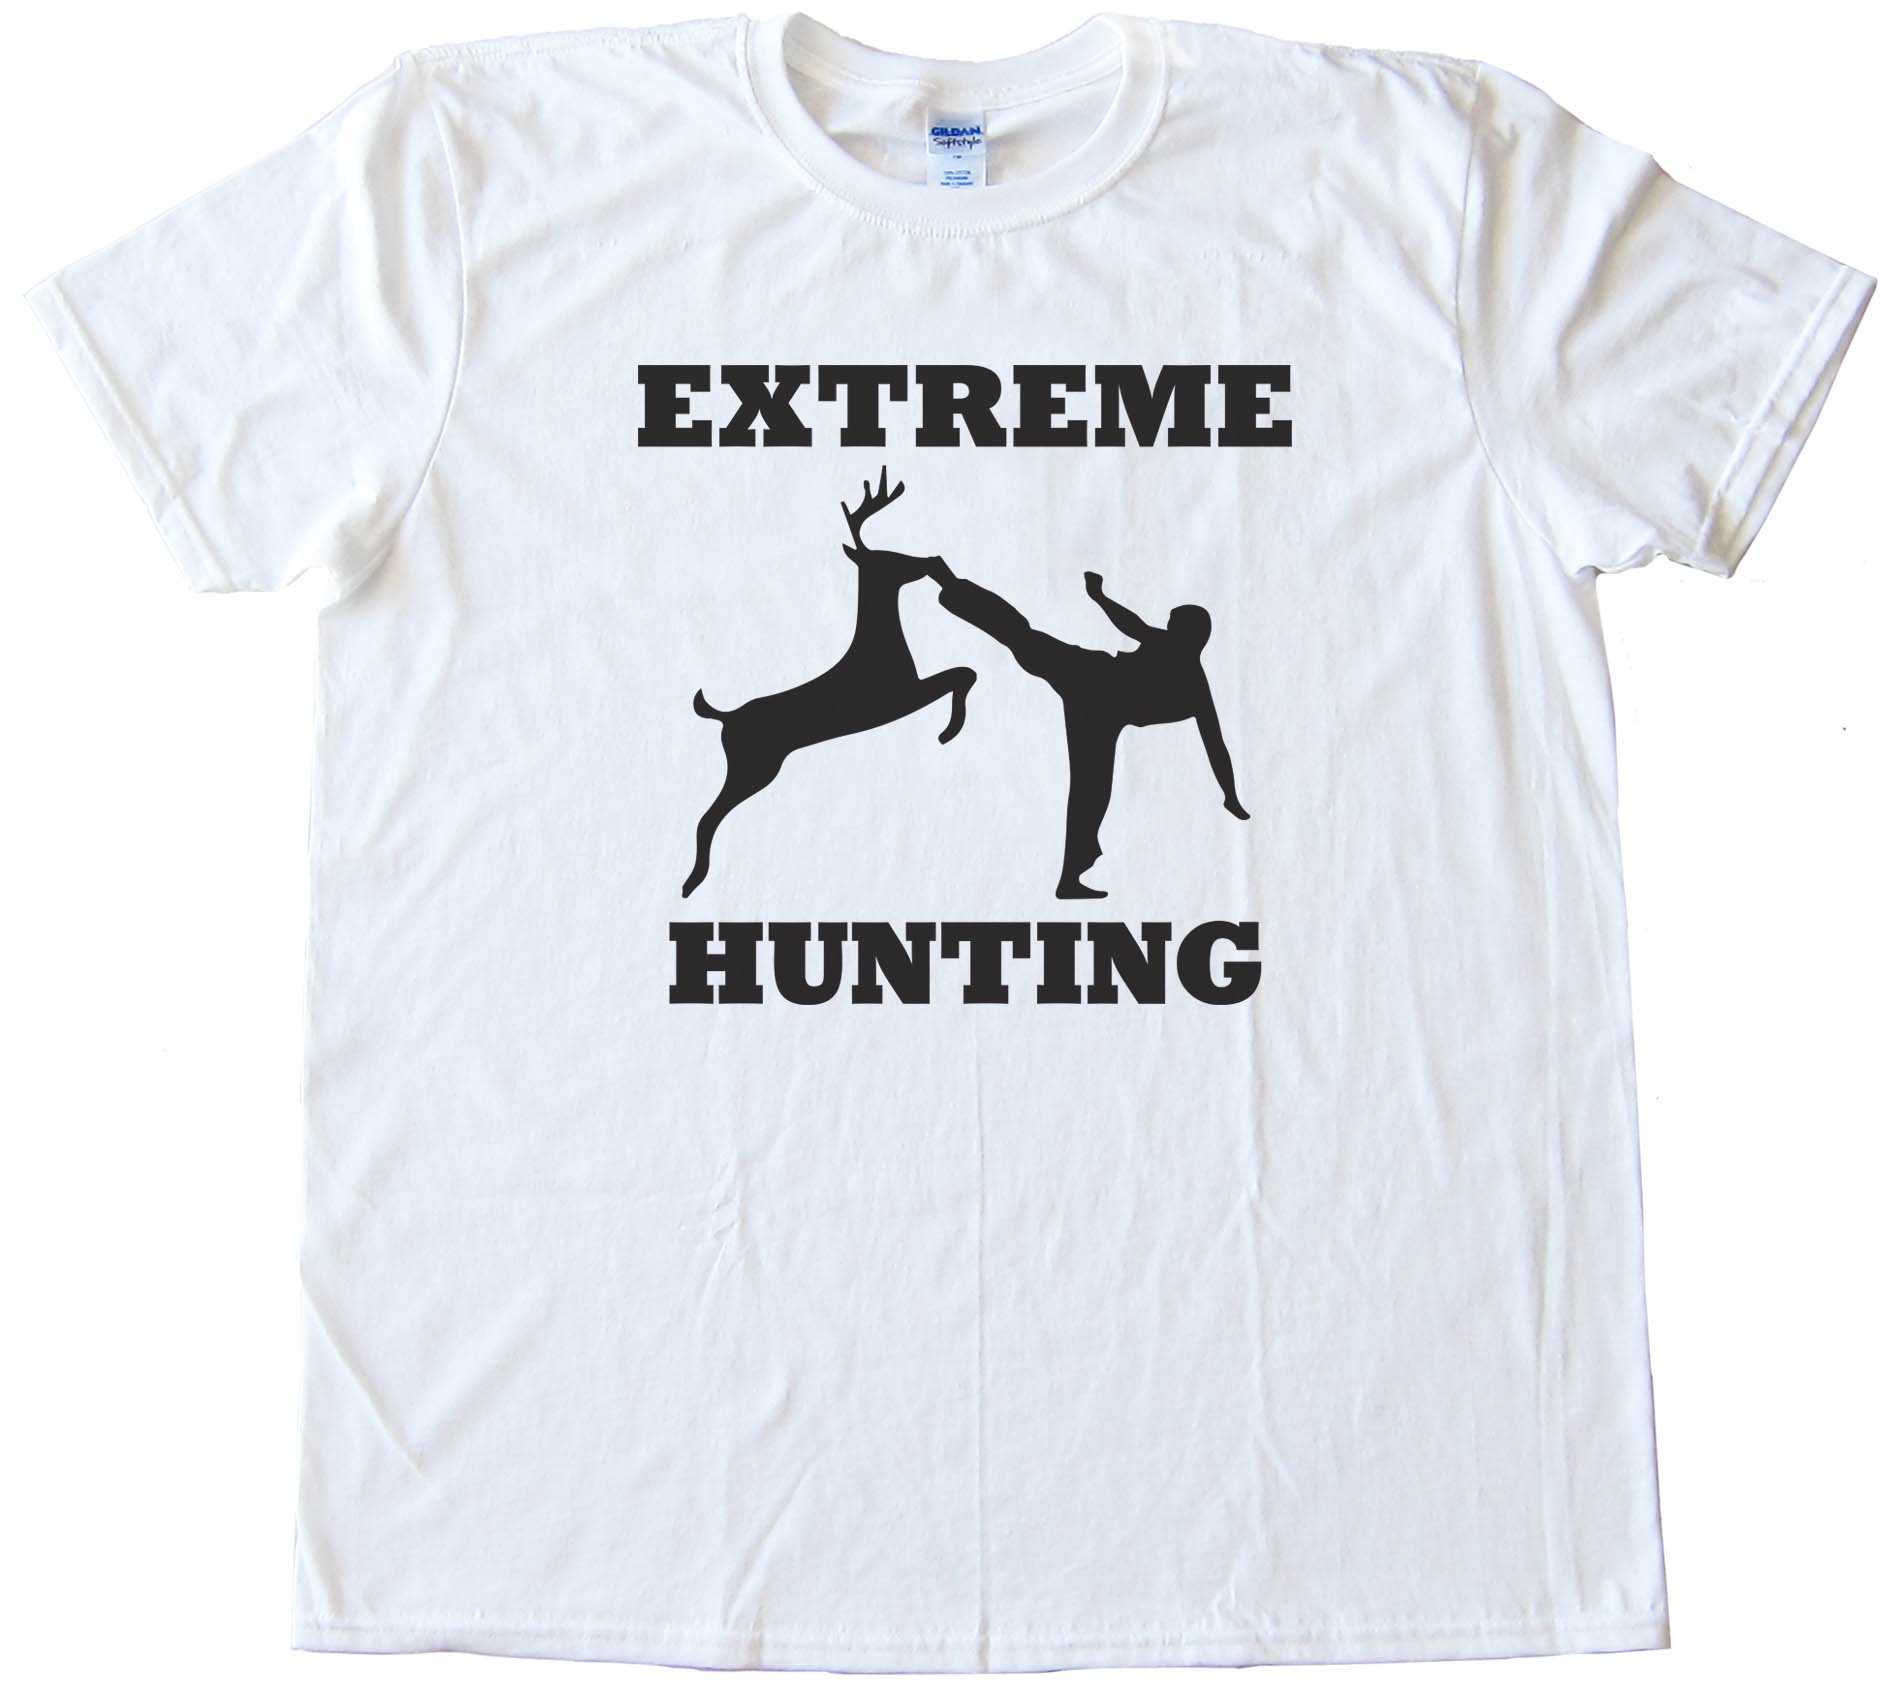 Extreme Hunting - Tee Shirt